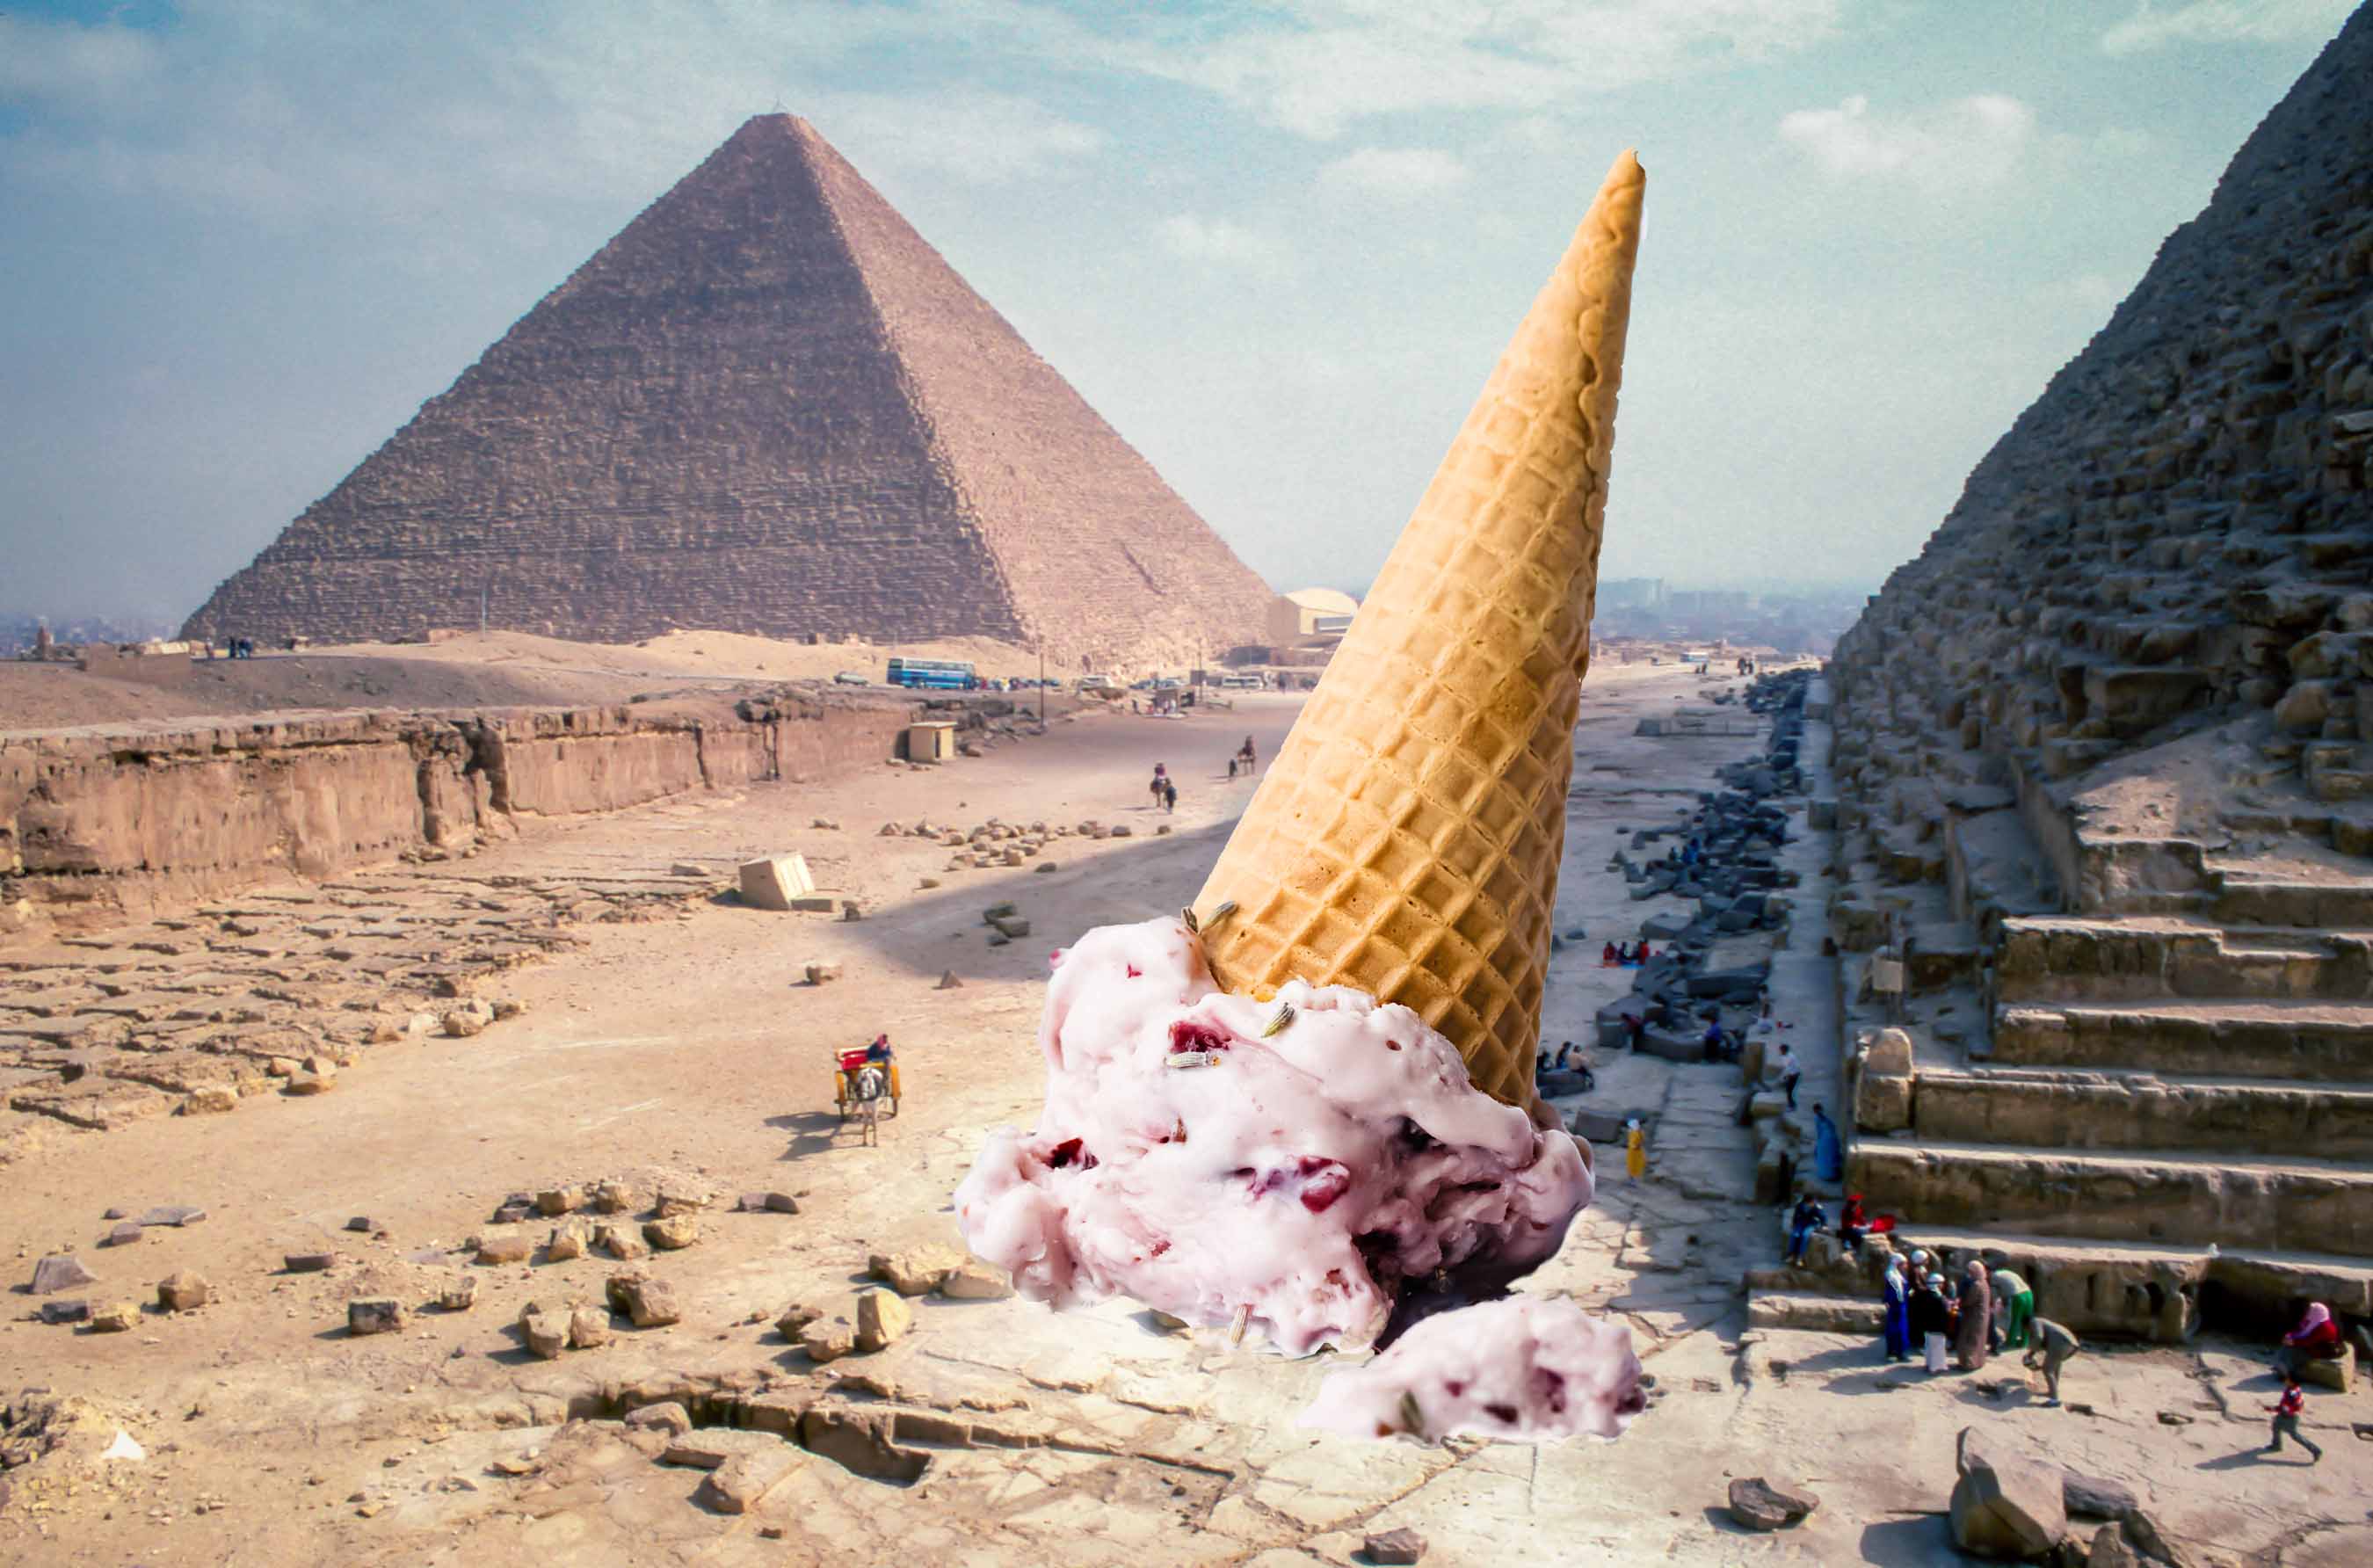 art every day number 553 digital collage imaginary ice cream desert